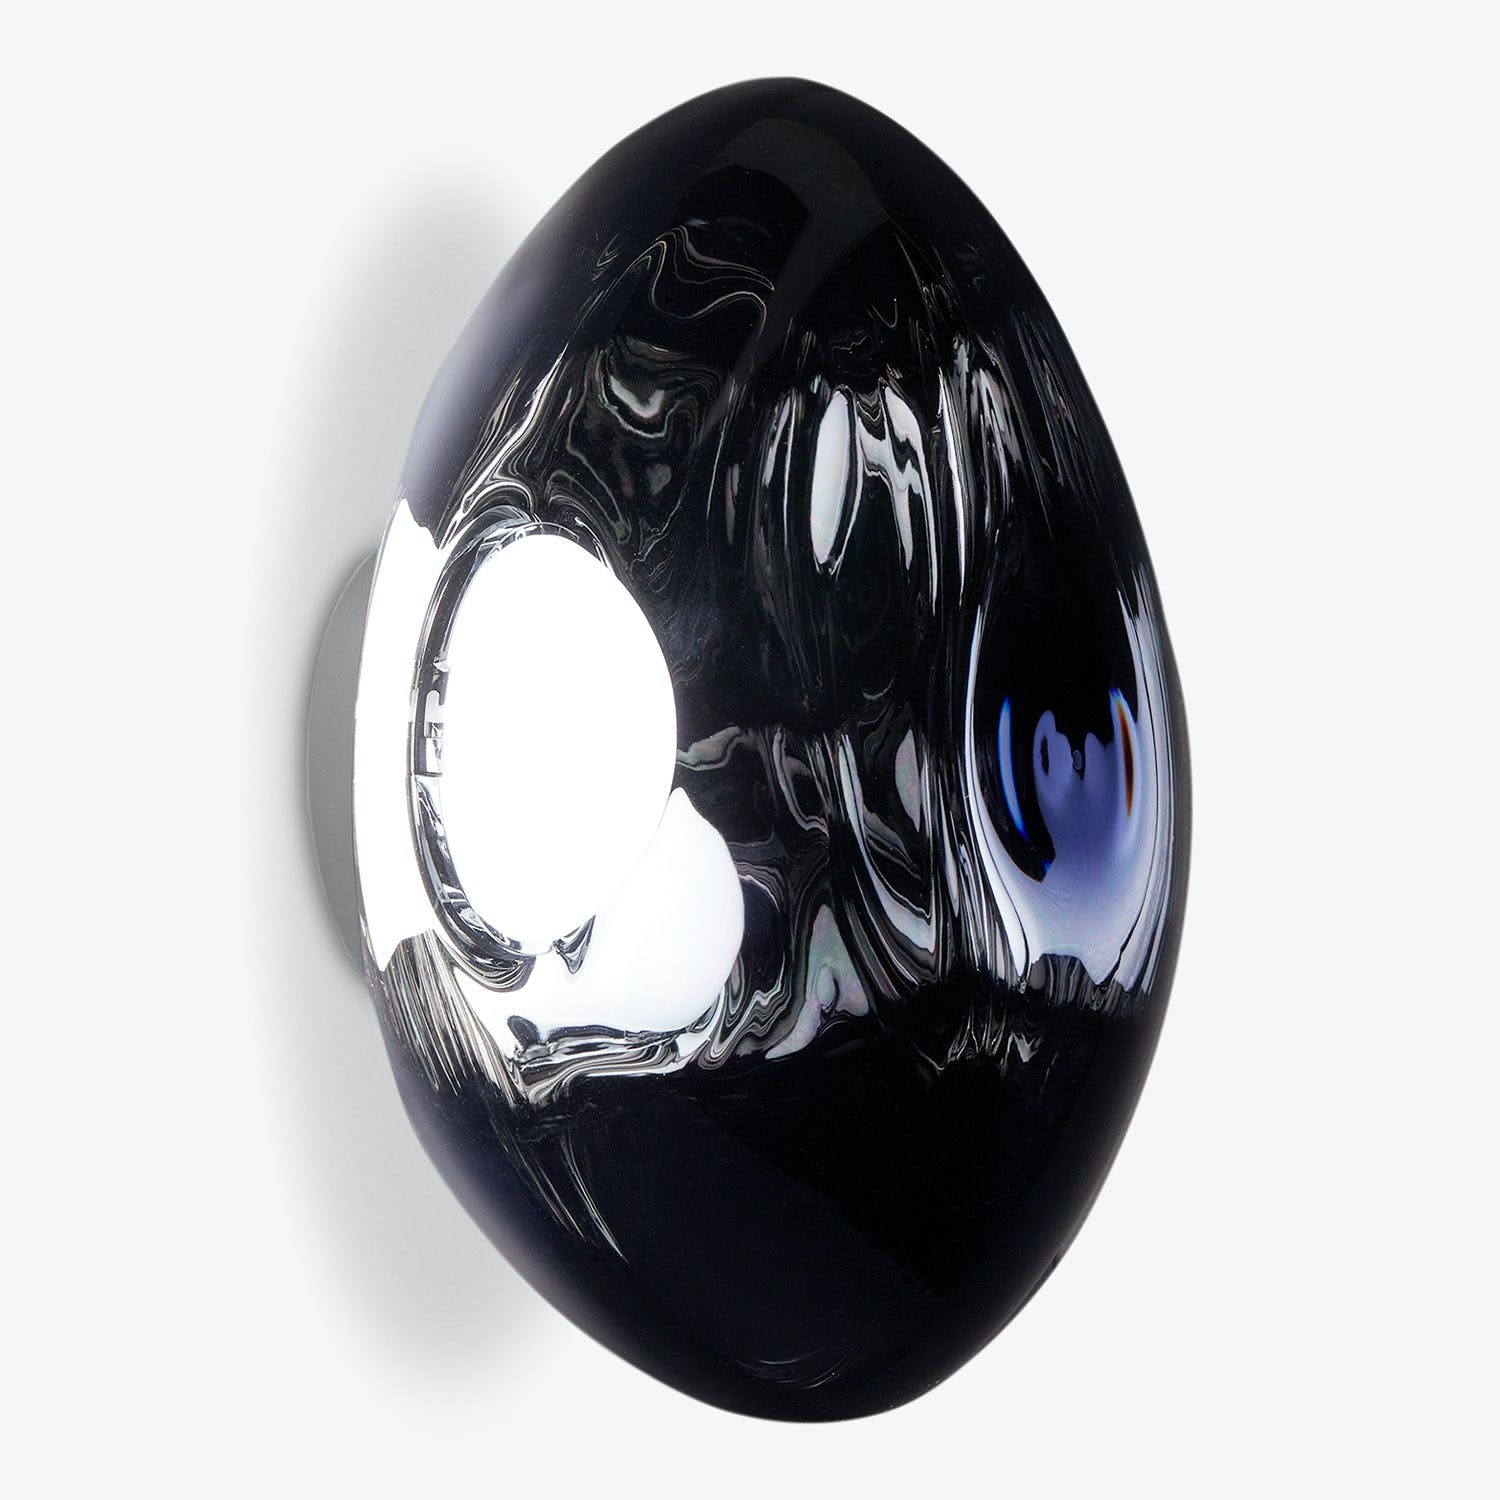 Hollow, reflective black sphere creates abstract, liquid-like light distortion.